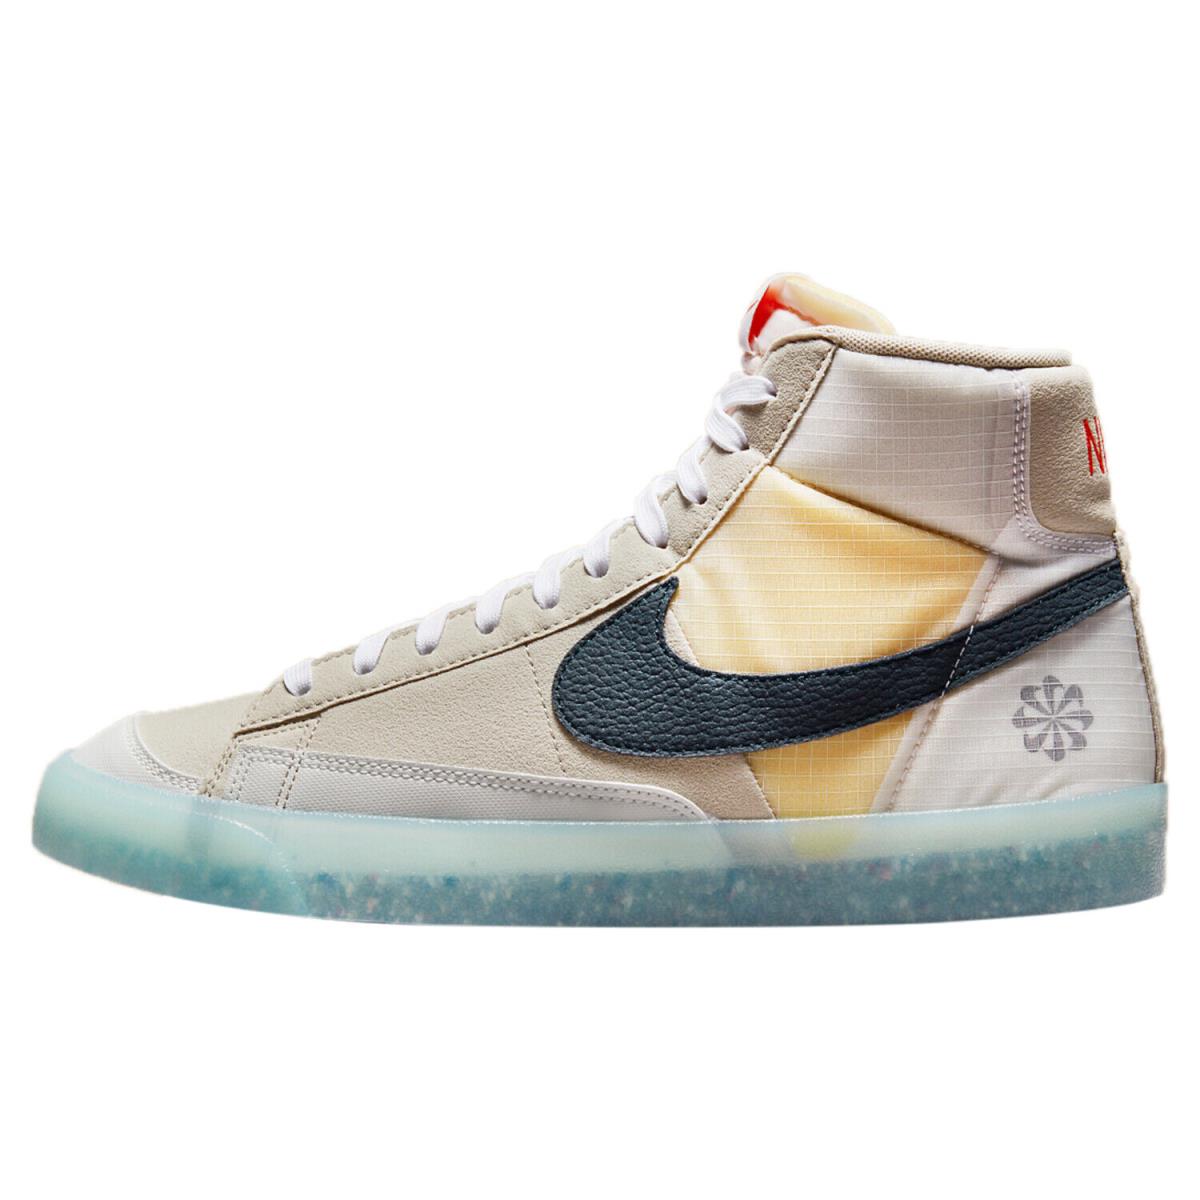 Nike Blazer Mid `77 Move To Zero Mens DH4505-200 Cream II Navy Shoes Size 10 - Cream II/Orange/Glacier Ice/Armory Navy